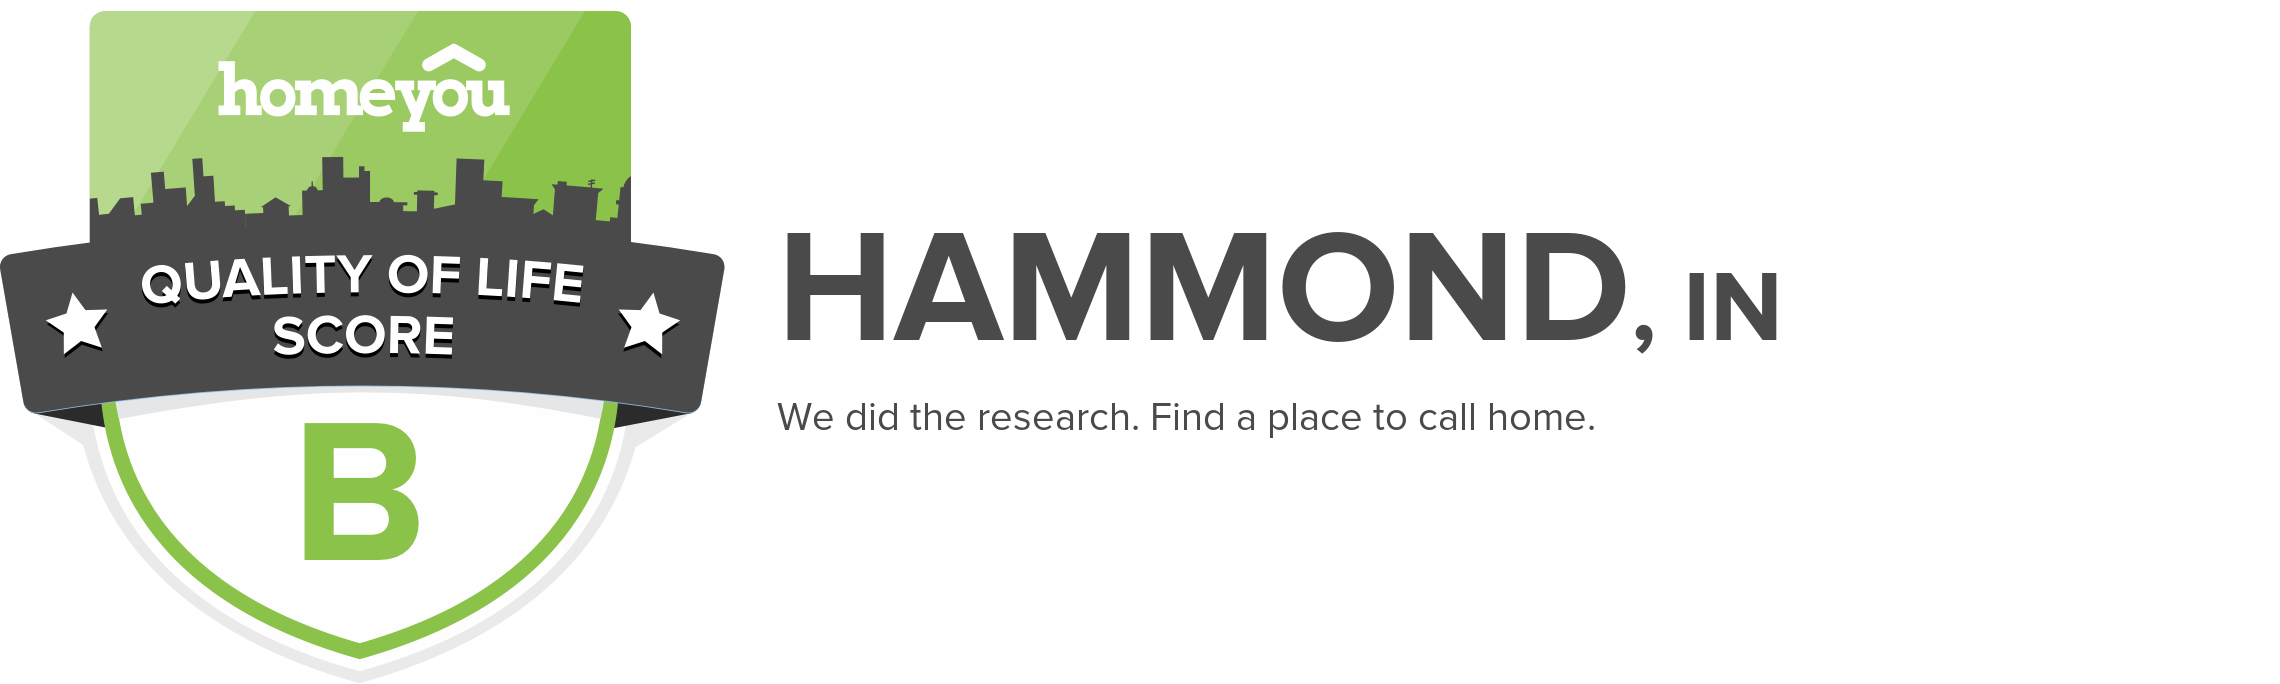 Hammond, IN